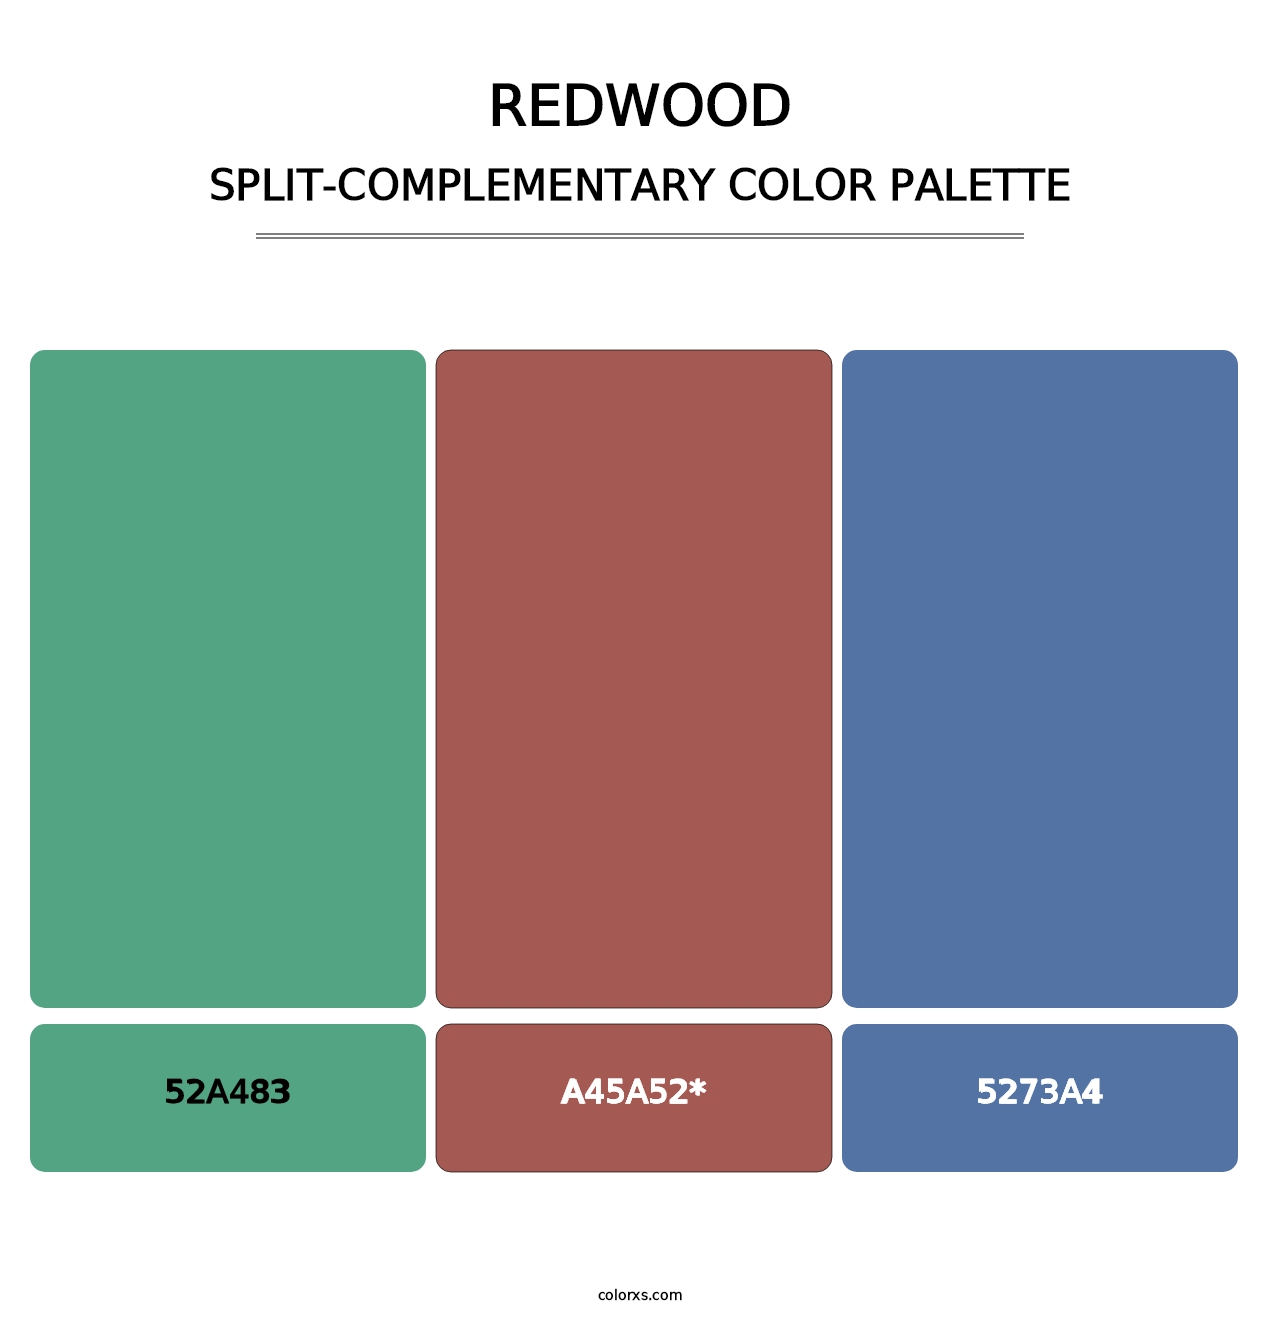 Redwood - Split-Complementary Color Palette